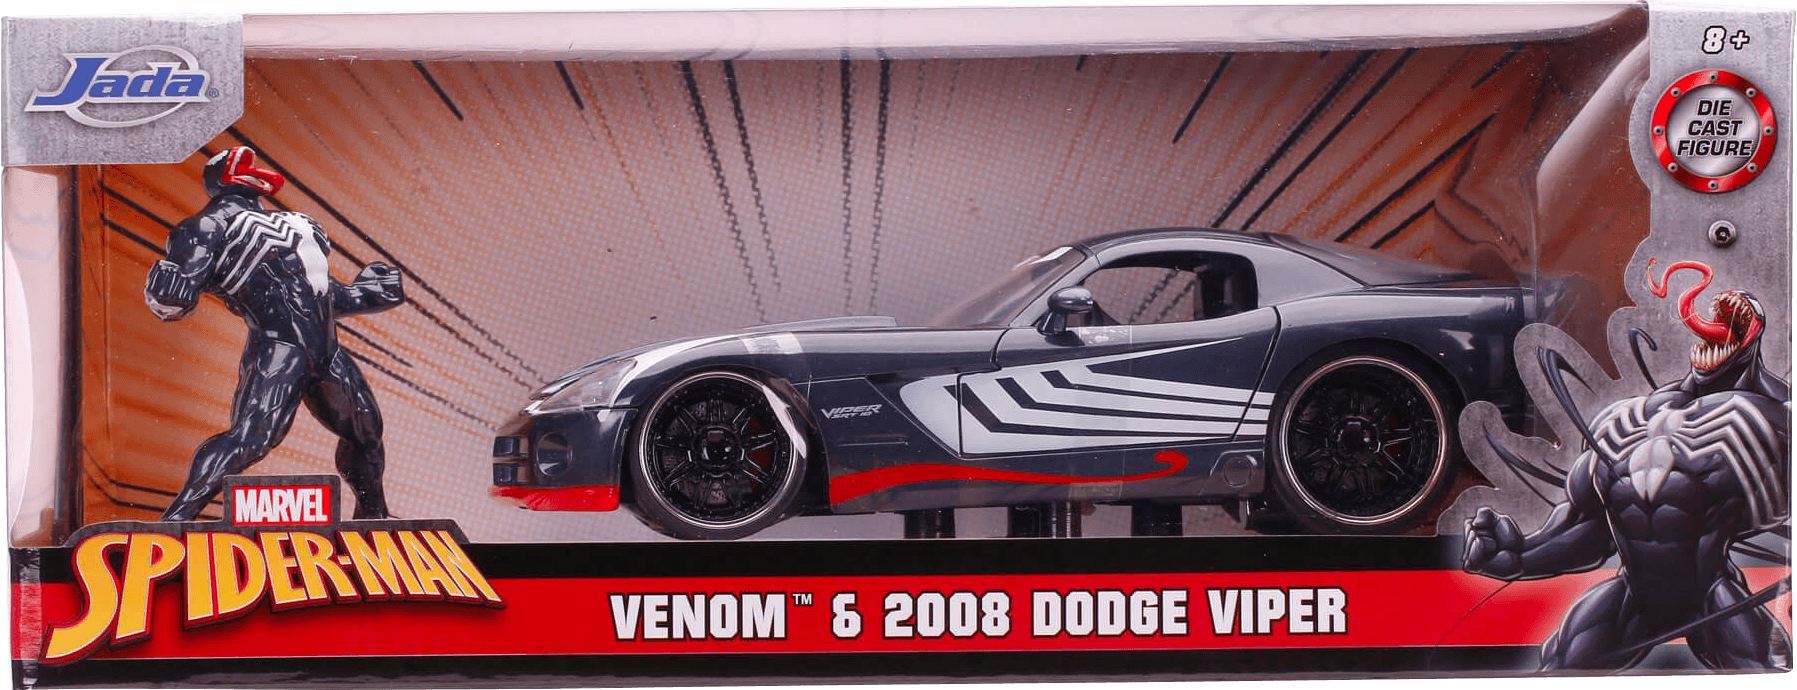 JAD31750 Spider-Man (comics) - '08 Dodge Viper SRT 10 with Venom 1:24 Scale Hollywood Ride - Jada Toys - Titan Pop Culture